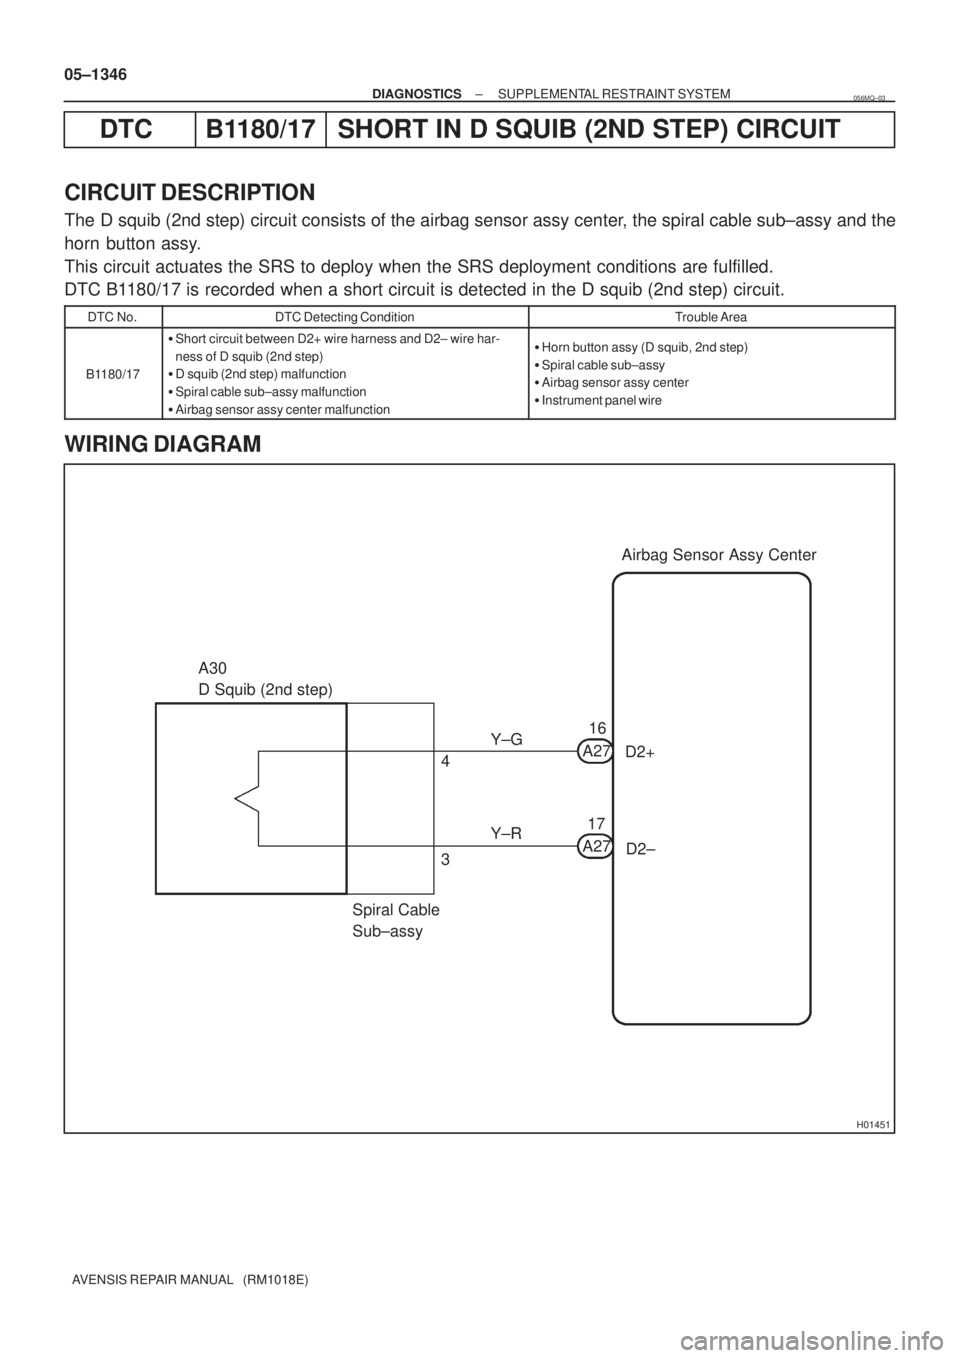 TOYOTA AVENSIS 2005  Service Repair Manual H01451
Airbag Sensor Assy Center
A30 
D Squib (2nd step)
Spiral Cable 
Sub±assyY±R Y±G
D2+
D2± 4A27
3A271716 05±1346
± DIAGNOSTICSSUPPLEMENTAL RESTRAINT SYSTEM
AVENSIS REPAIR MANUAL   (RM1018E)
